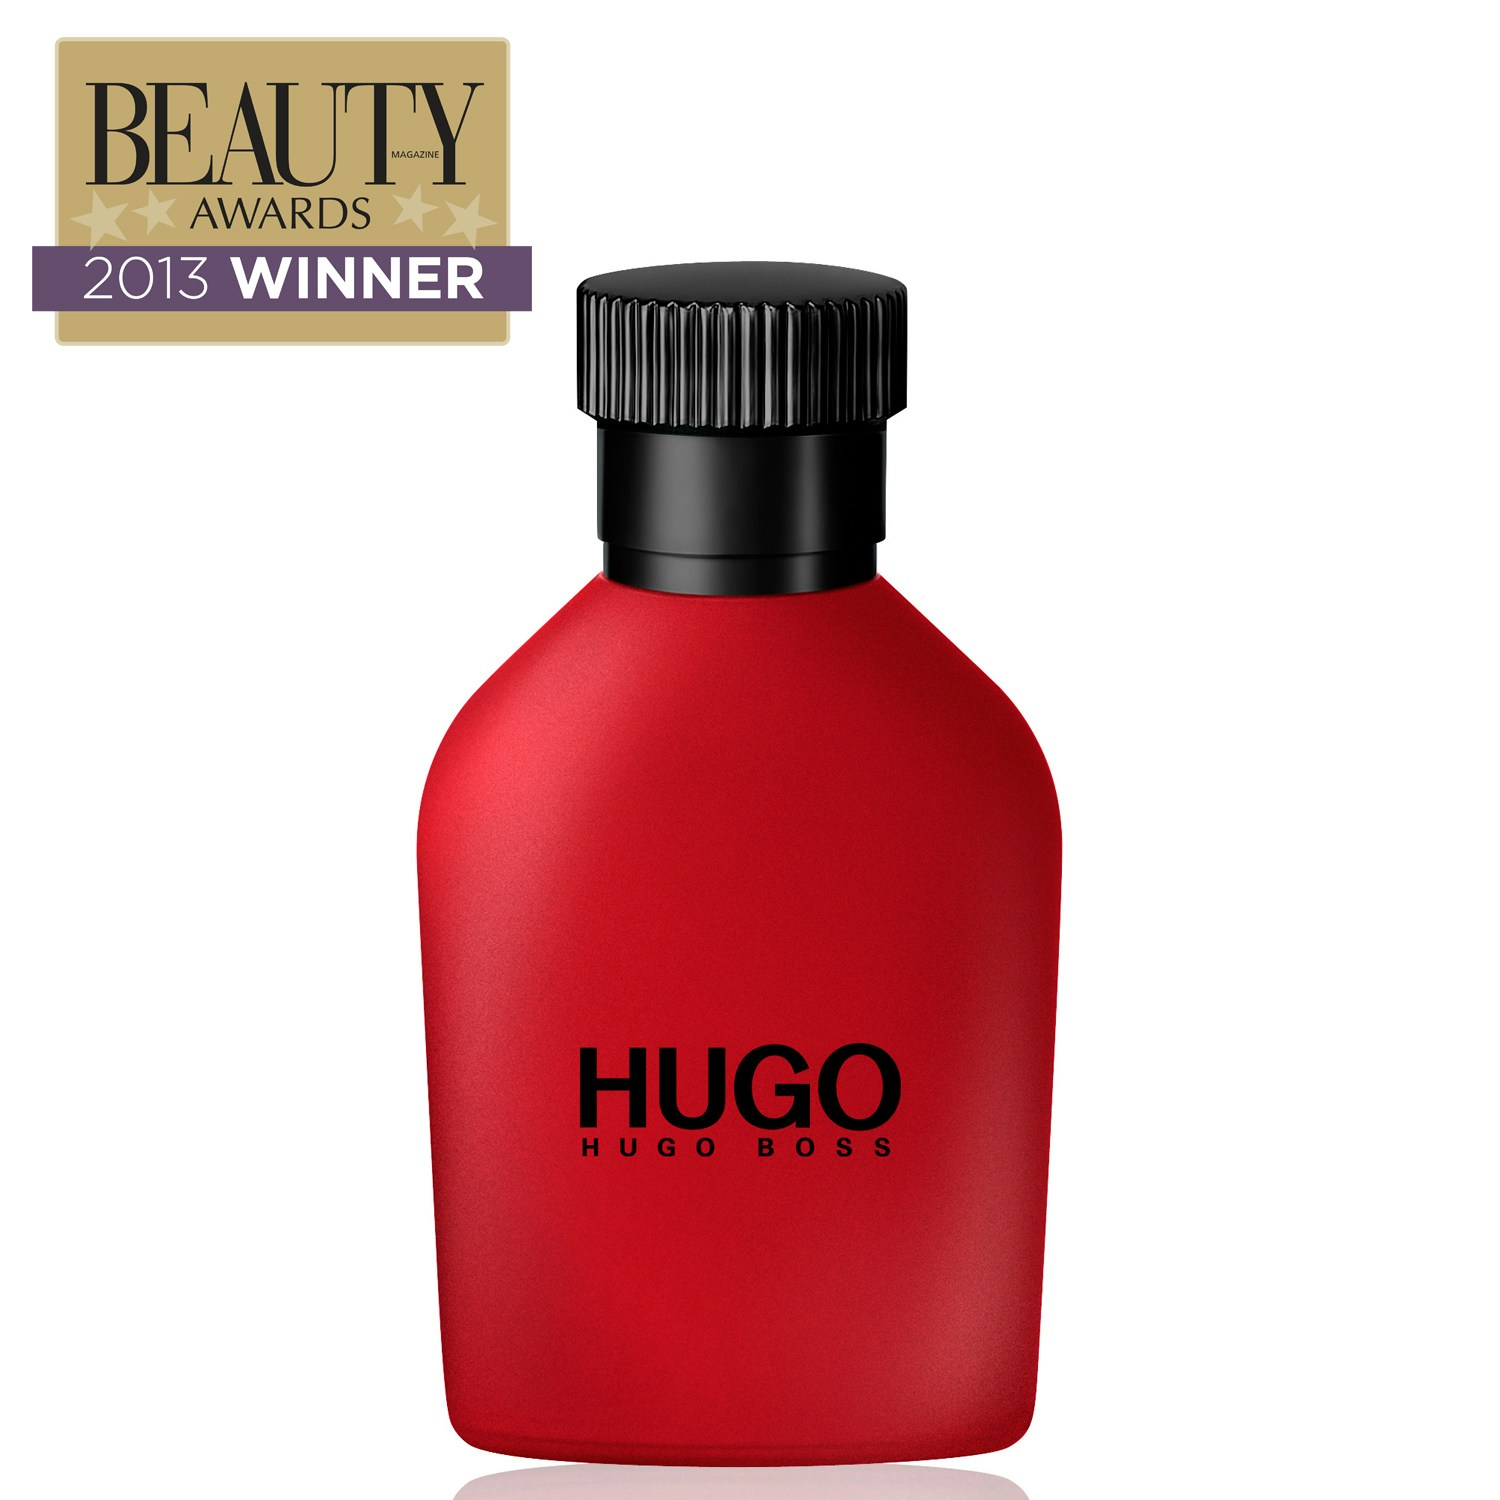 Hugo boss красные. Hugo Boss Hugo Red 150ml. Hugo Boss мужской Hugo туалетная вода (EDT) 40мл. Хьюго бос мудские красные. Хуго босс красный флакон мужские.